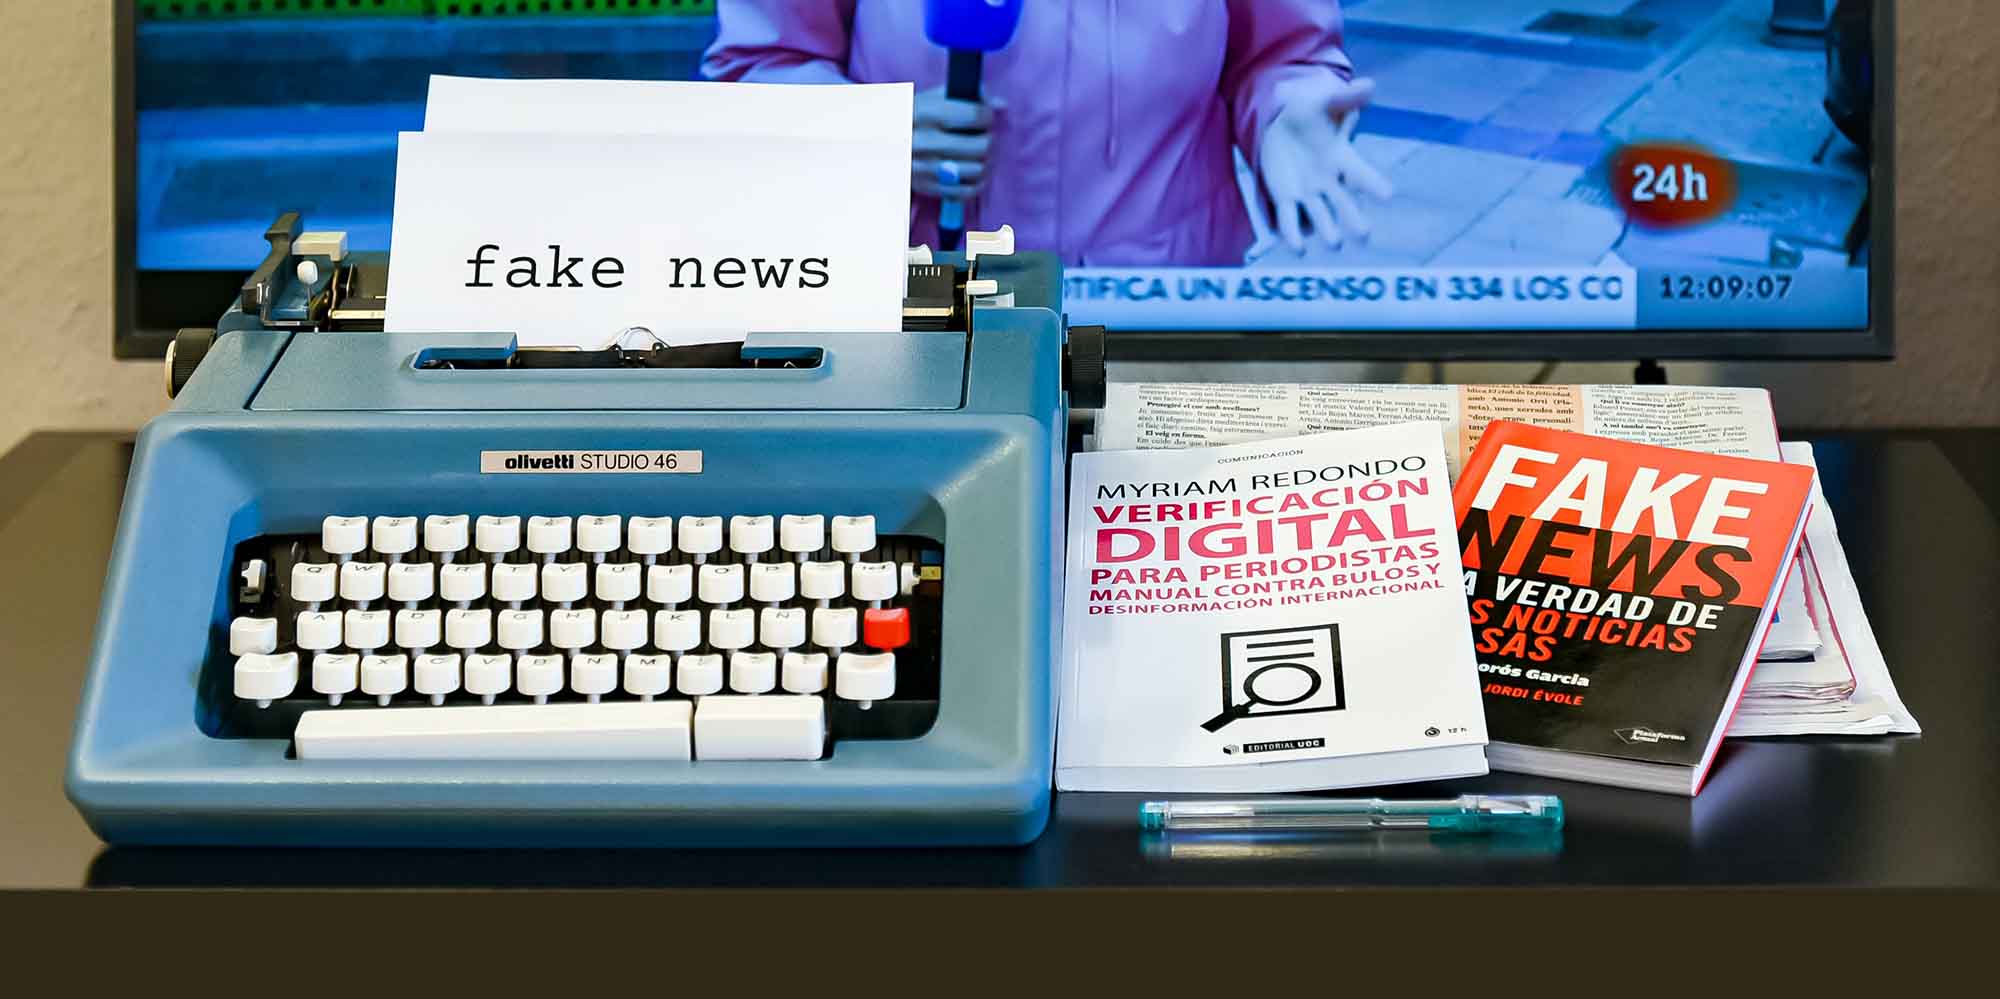 Are Resumes Fake News?